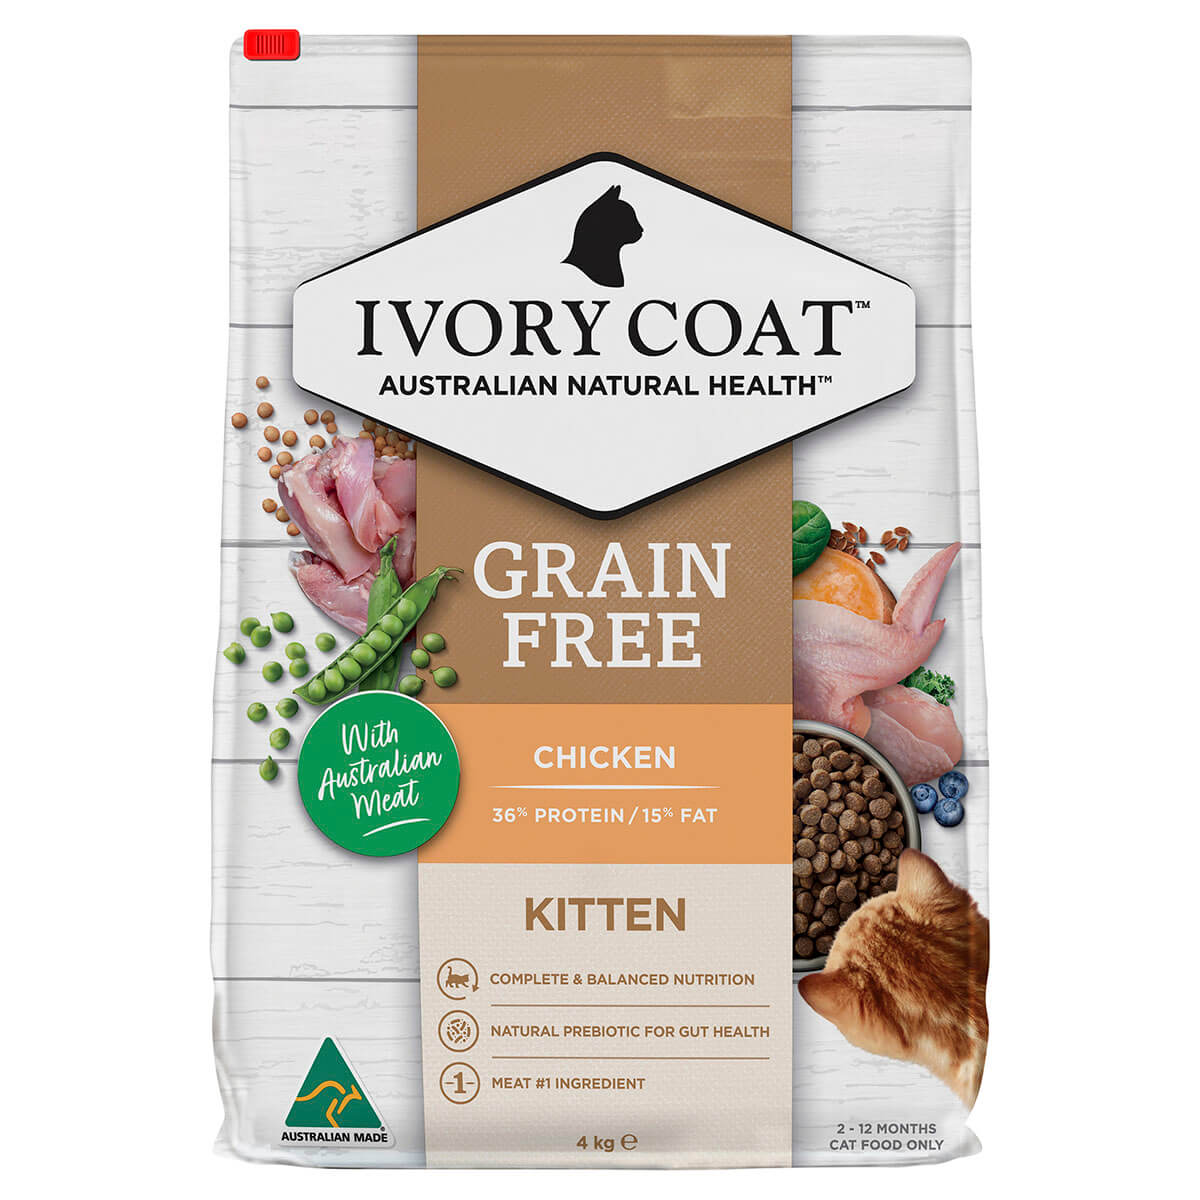 Ivory Coat Grain Free Kitten Chicken Dry Cat Food